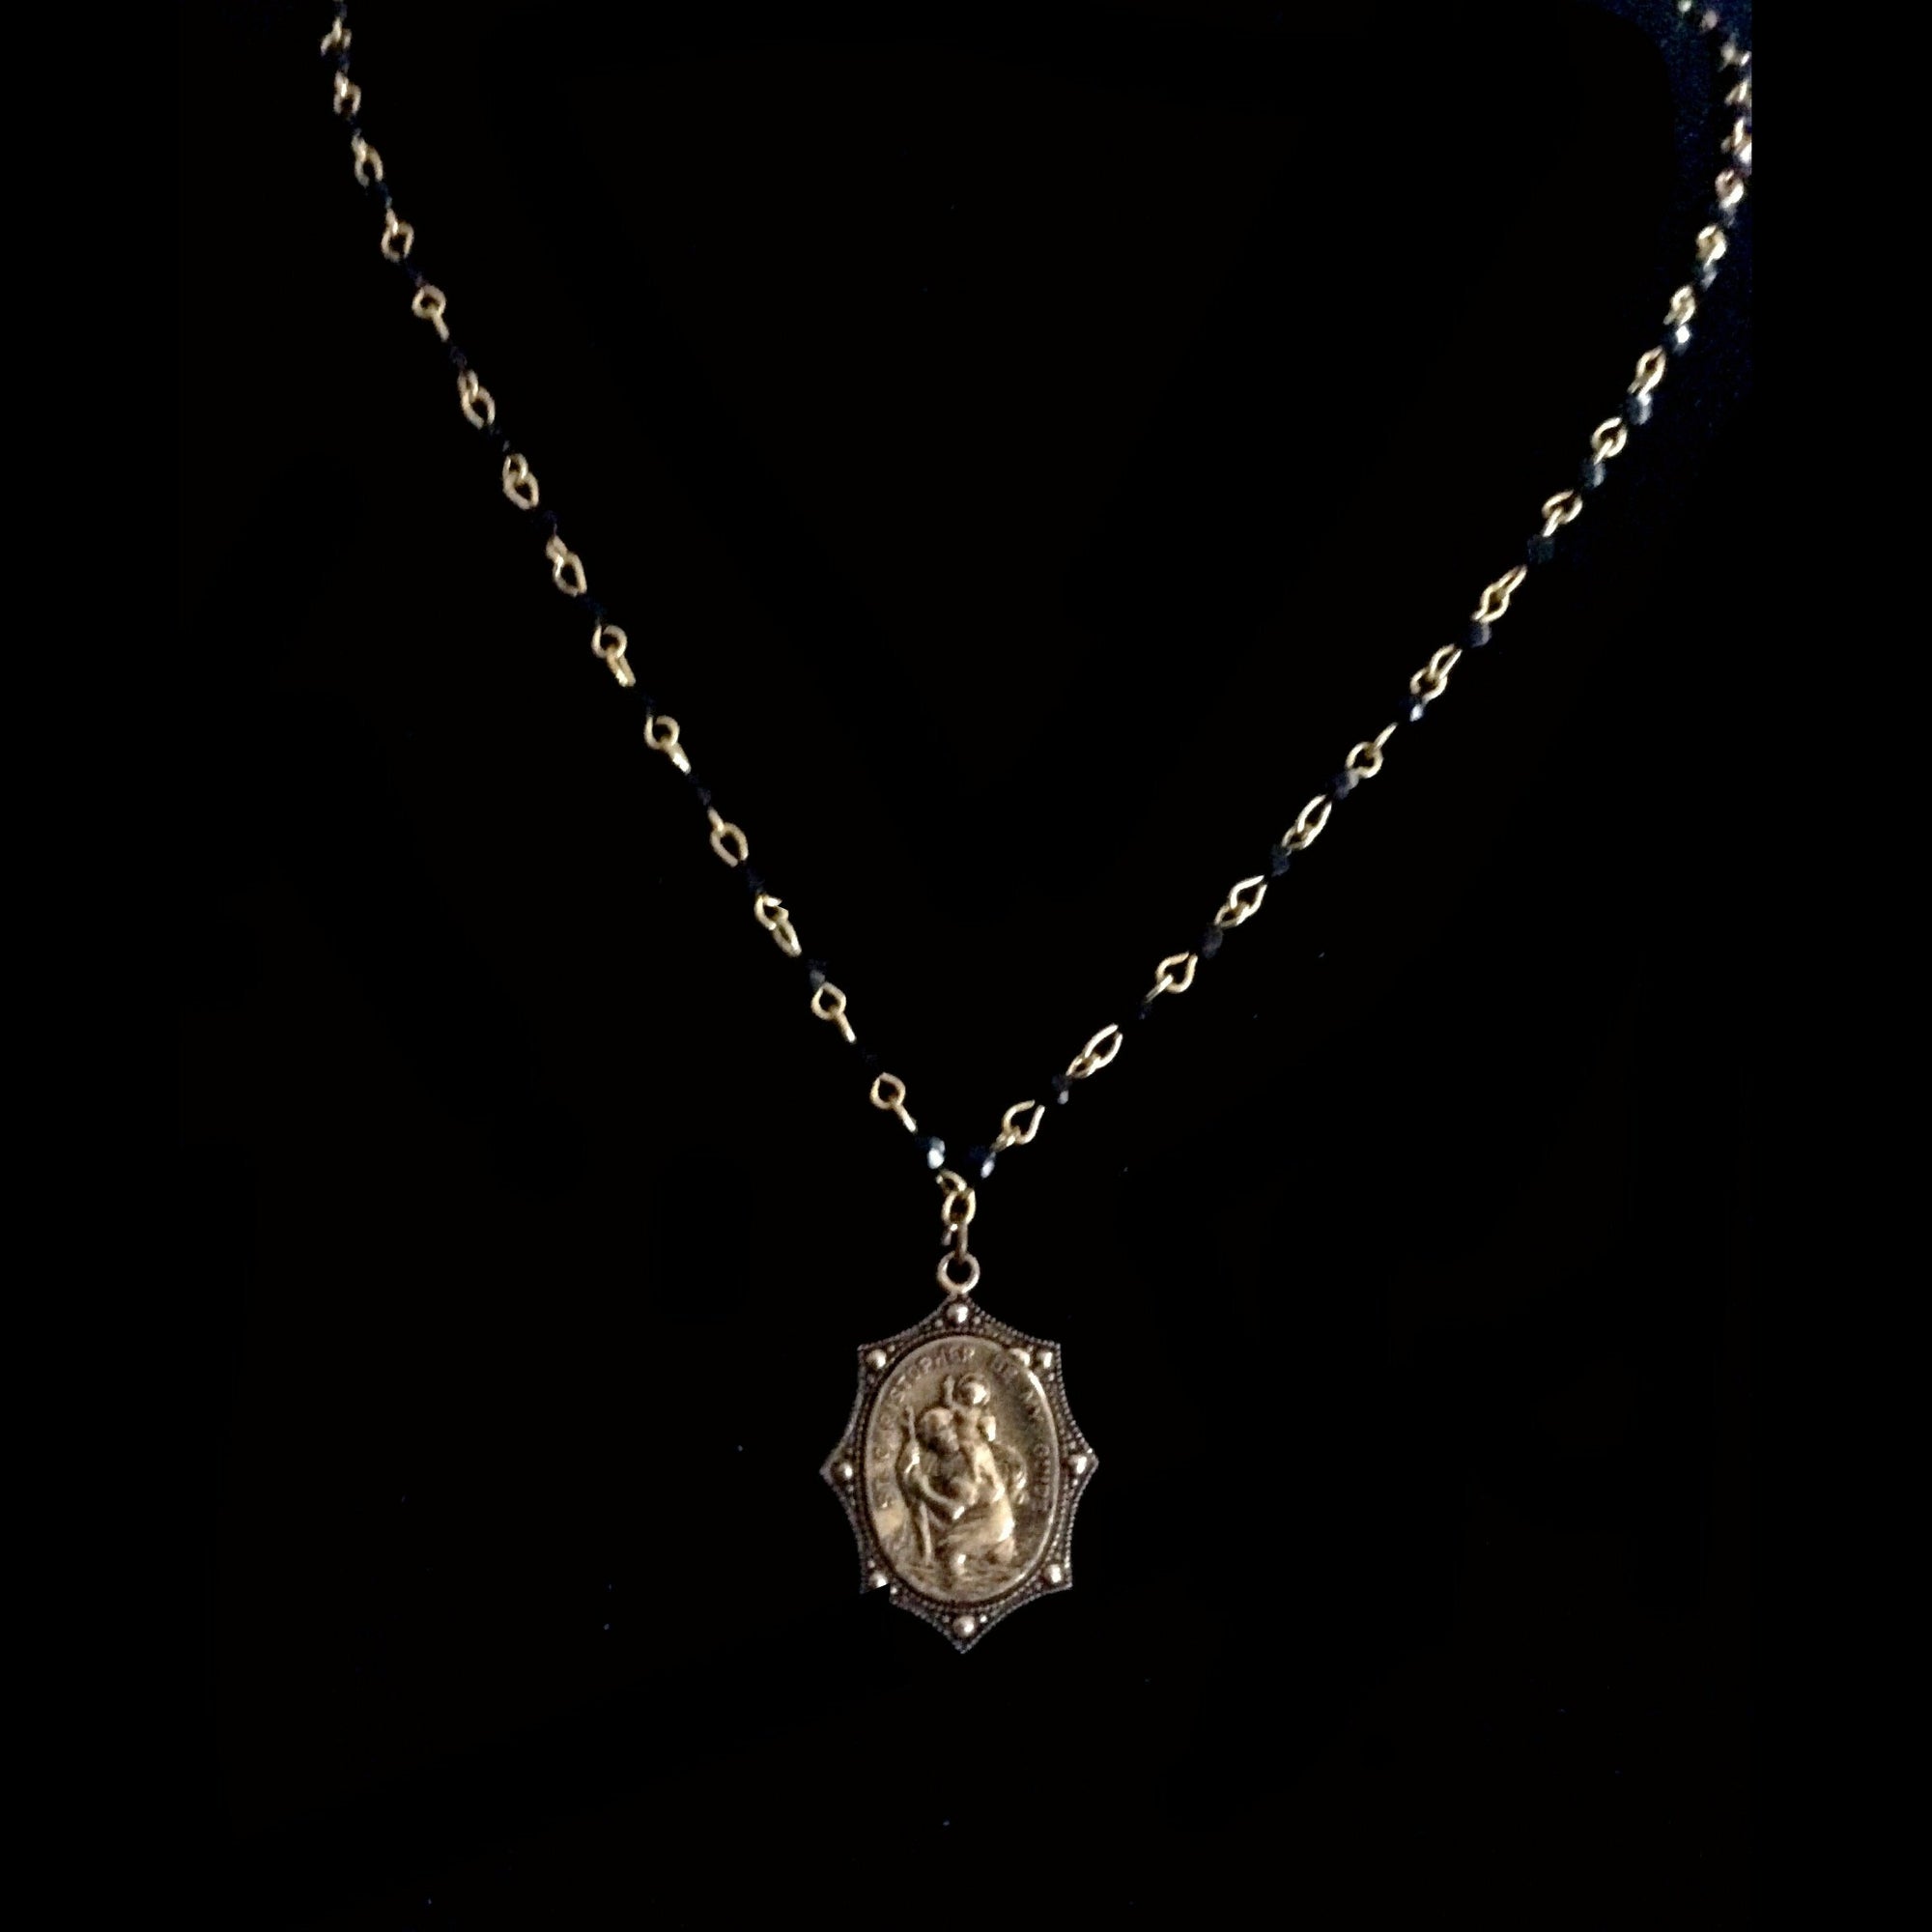 Whispering Goddess' Saint Christopher Medal in Black Jet and Gold Necklace